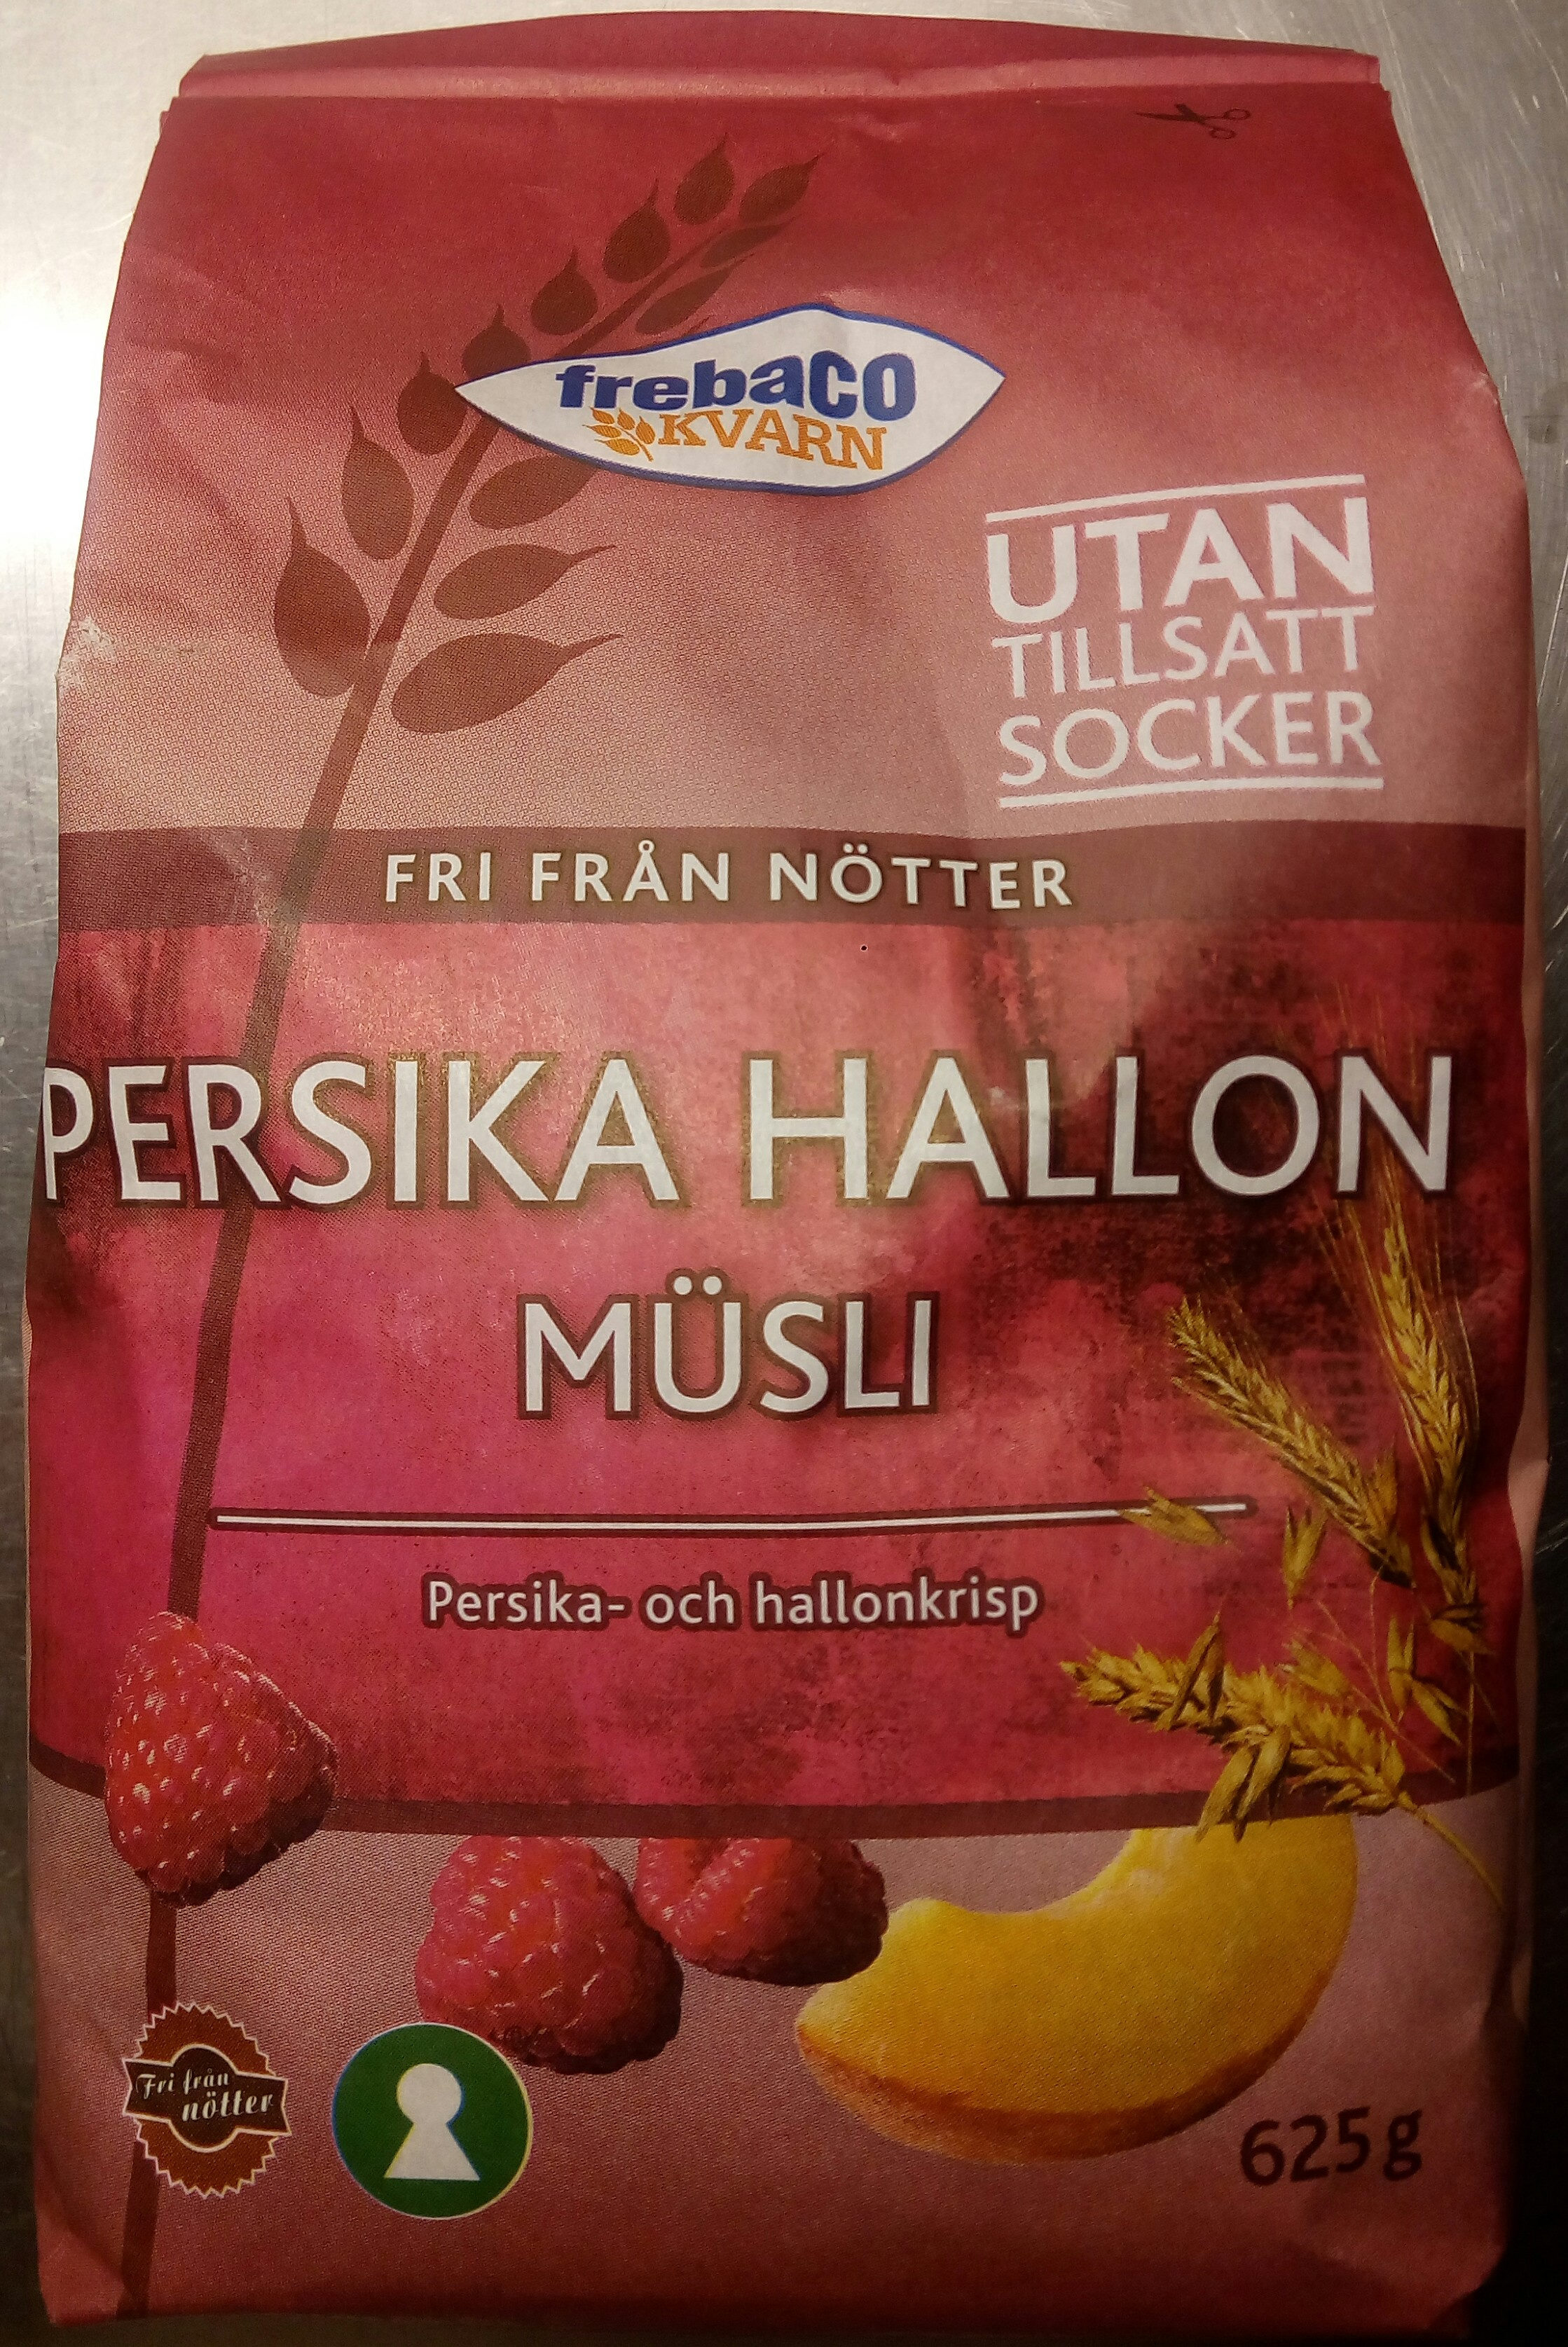 Frebaco Kvarn Persika Hallon Müsli - Produkt - sv